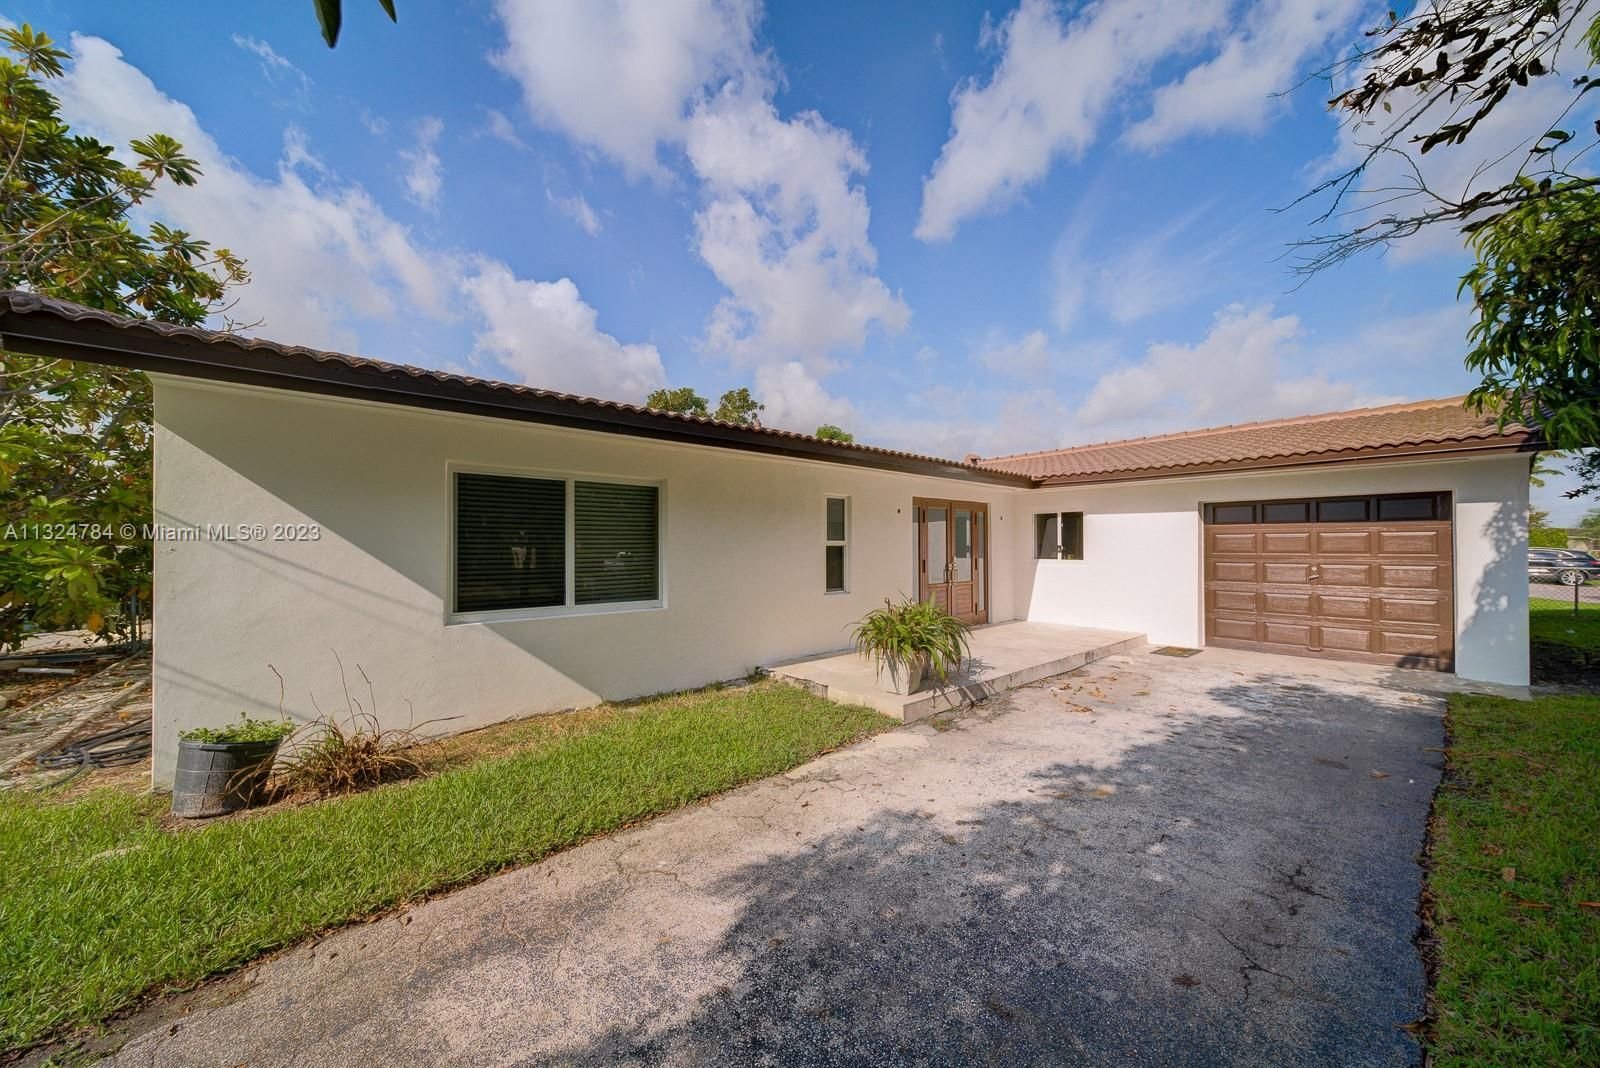 Real estate property located at 2920 118th Ave, Miami-Dade County, Miami, FL